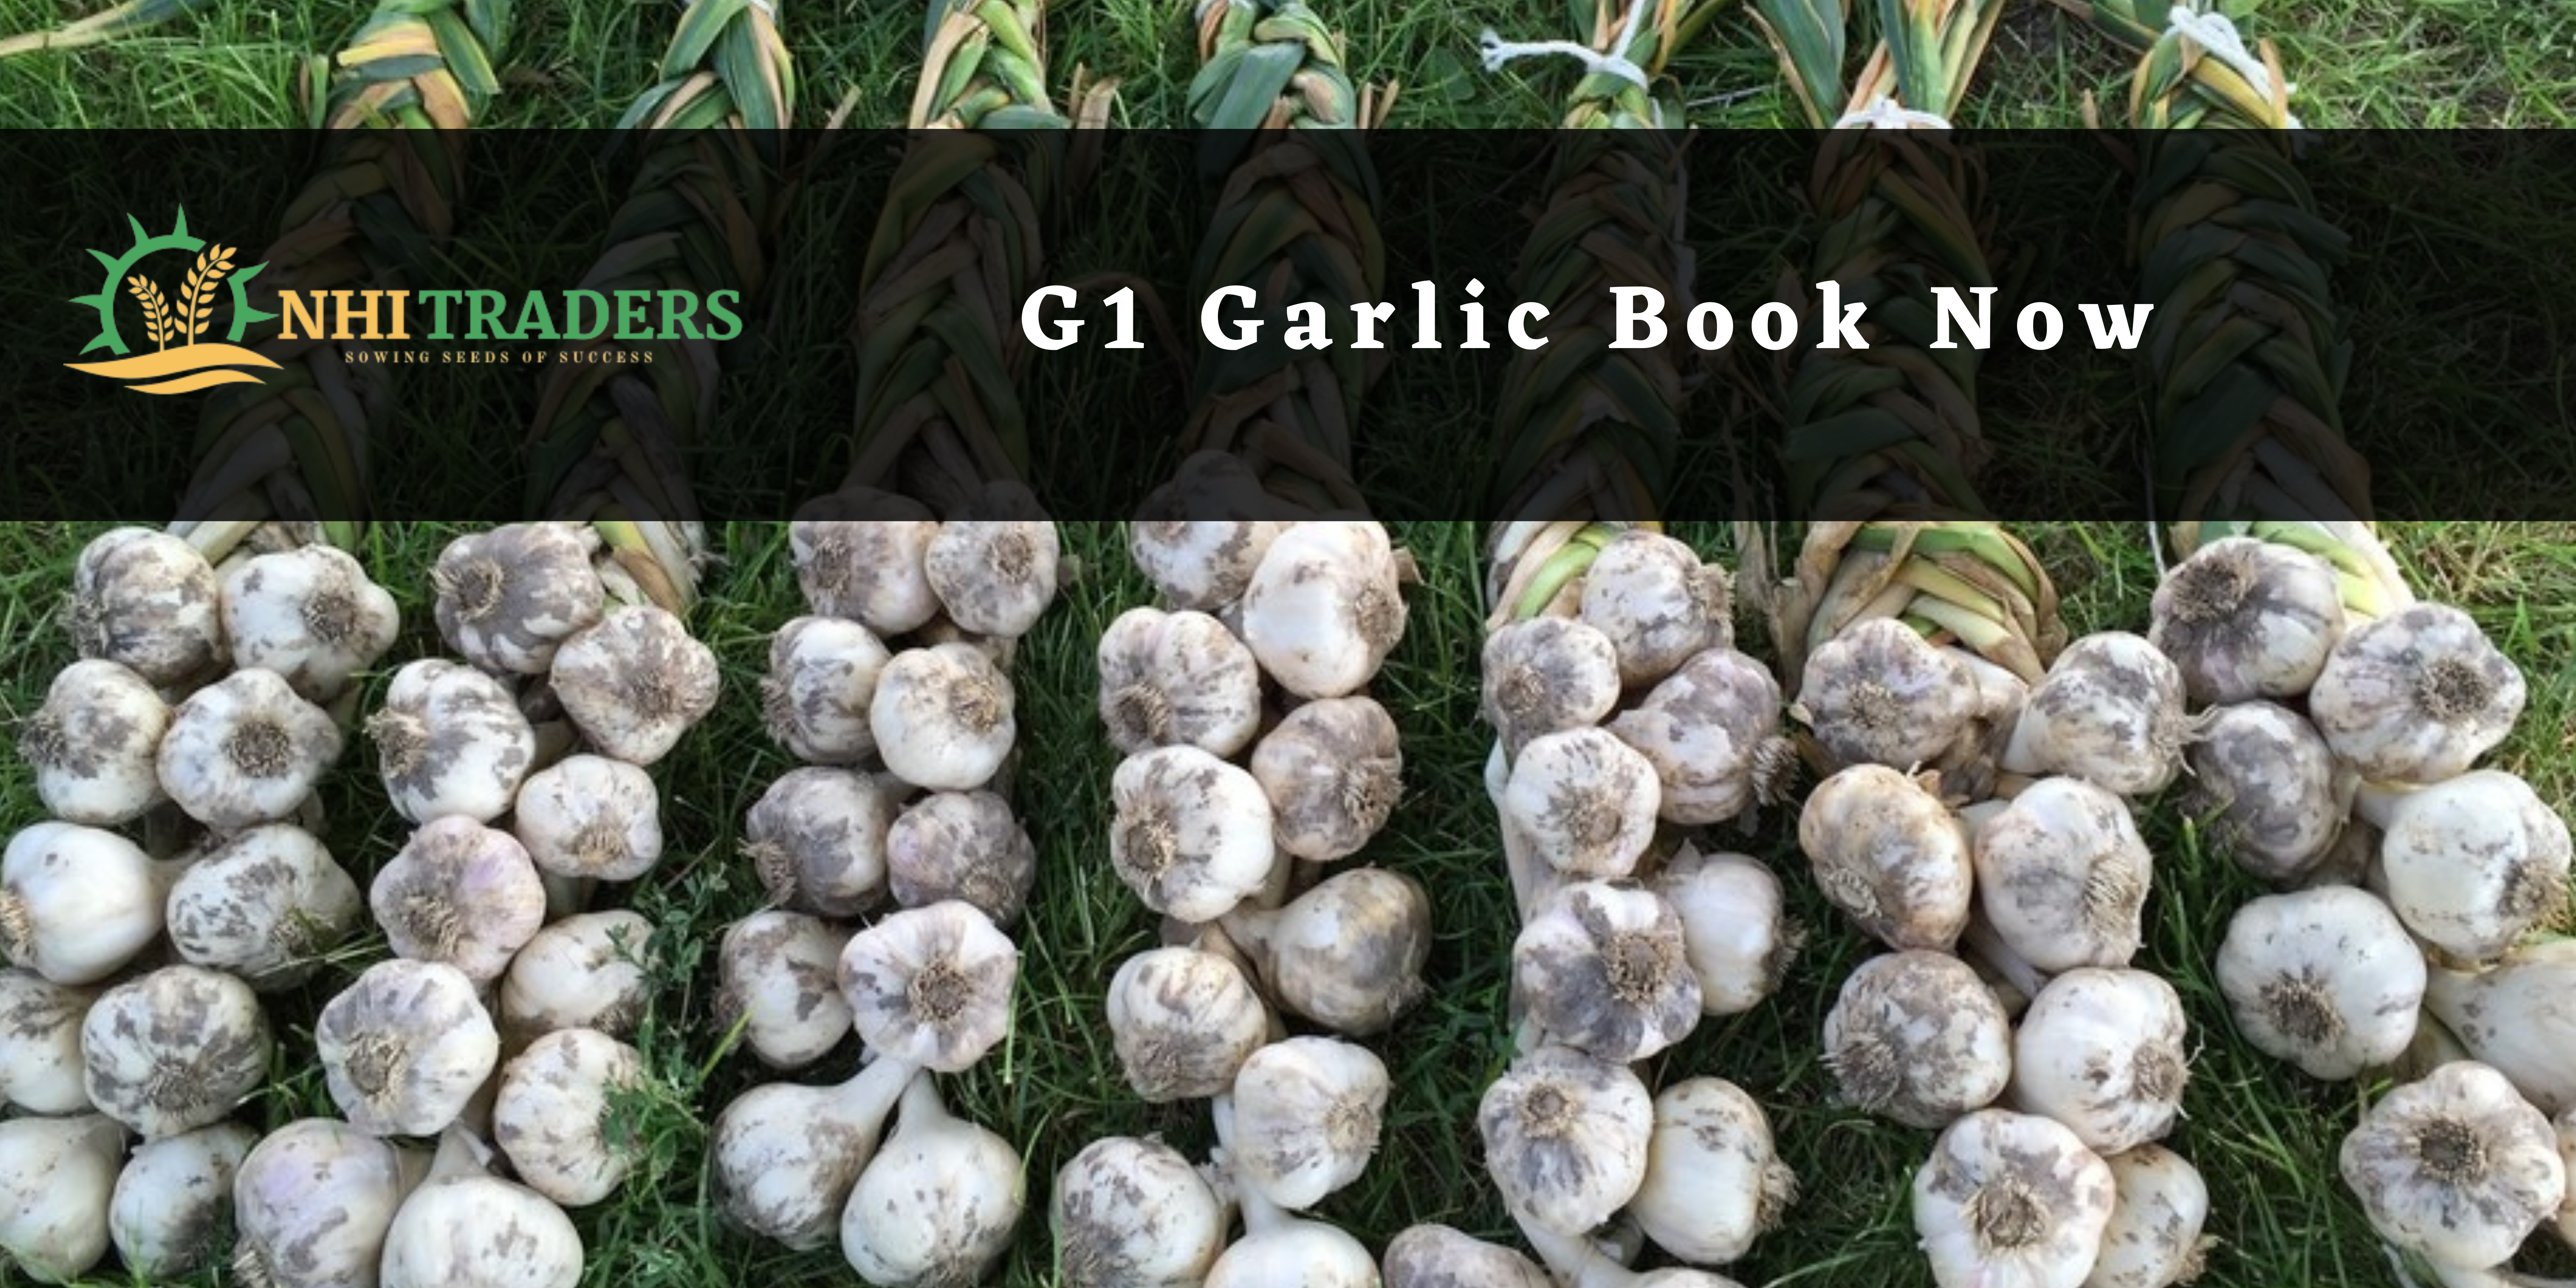 G1 Garlic, G1 Garlic price in Pakistan, G1 Garlic supplier in Pakistan, Best G1 Garlic price, High-quality G1 Garlic Seed, Buy G1 Garlic in Pakistan, G1 Garlic for sale in Pakistan, G1 Garlic seeds in Pakistan, G1 Garlic purchase online, G1 Garlic variety in Pakistan, G1 Garlic wholesale in Pakistan, G1 Garlic bulk purchase, Affordable G1 Garlic seeds, G1 Garlic sale offer, Fresh G1 Garlic seeds, NHI Traders, Agriculture,